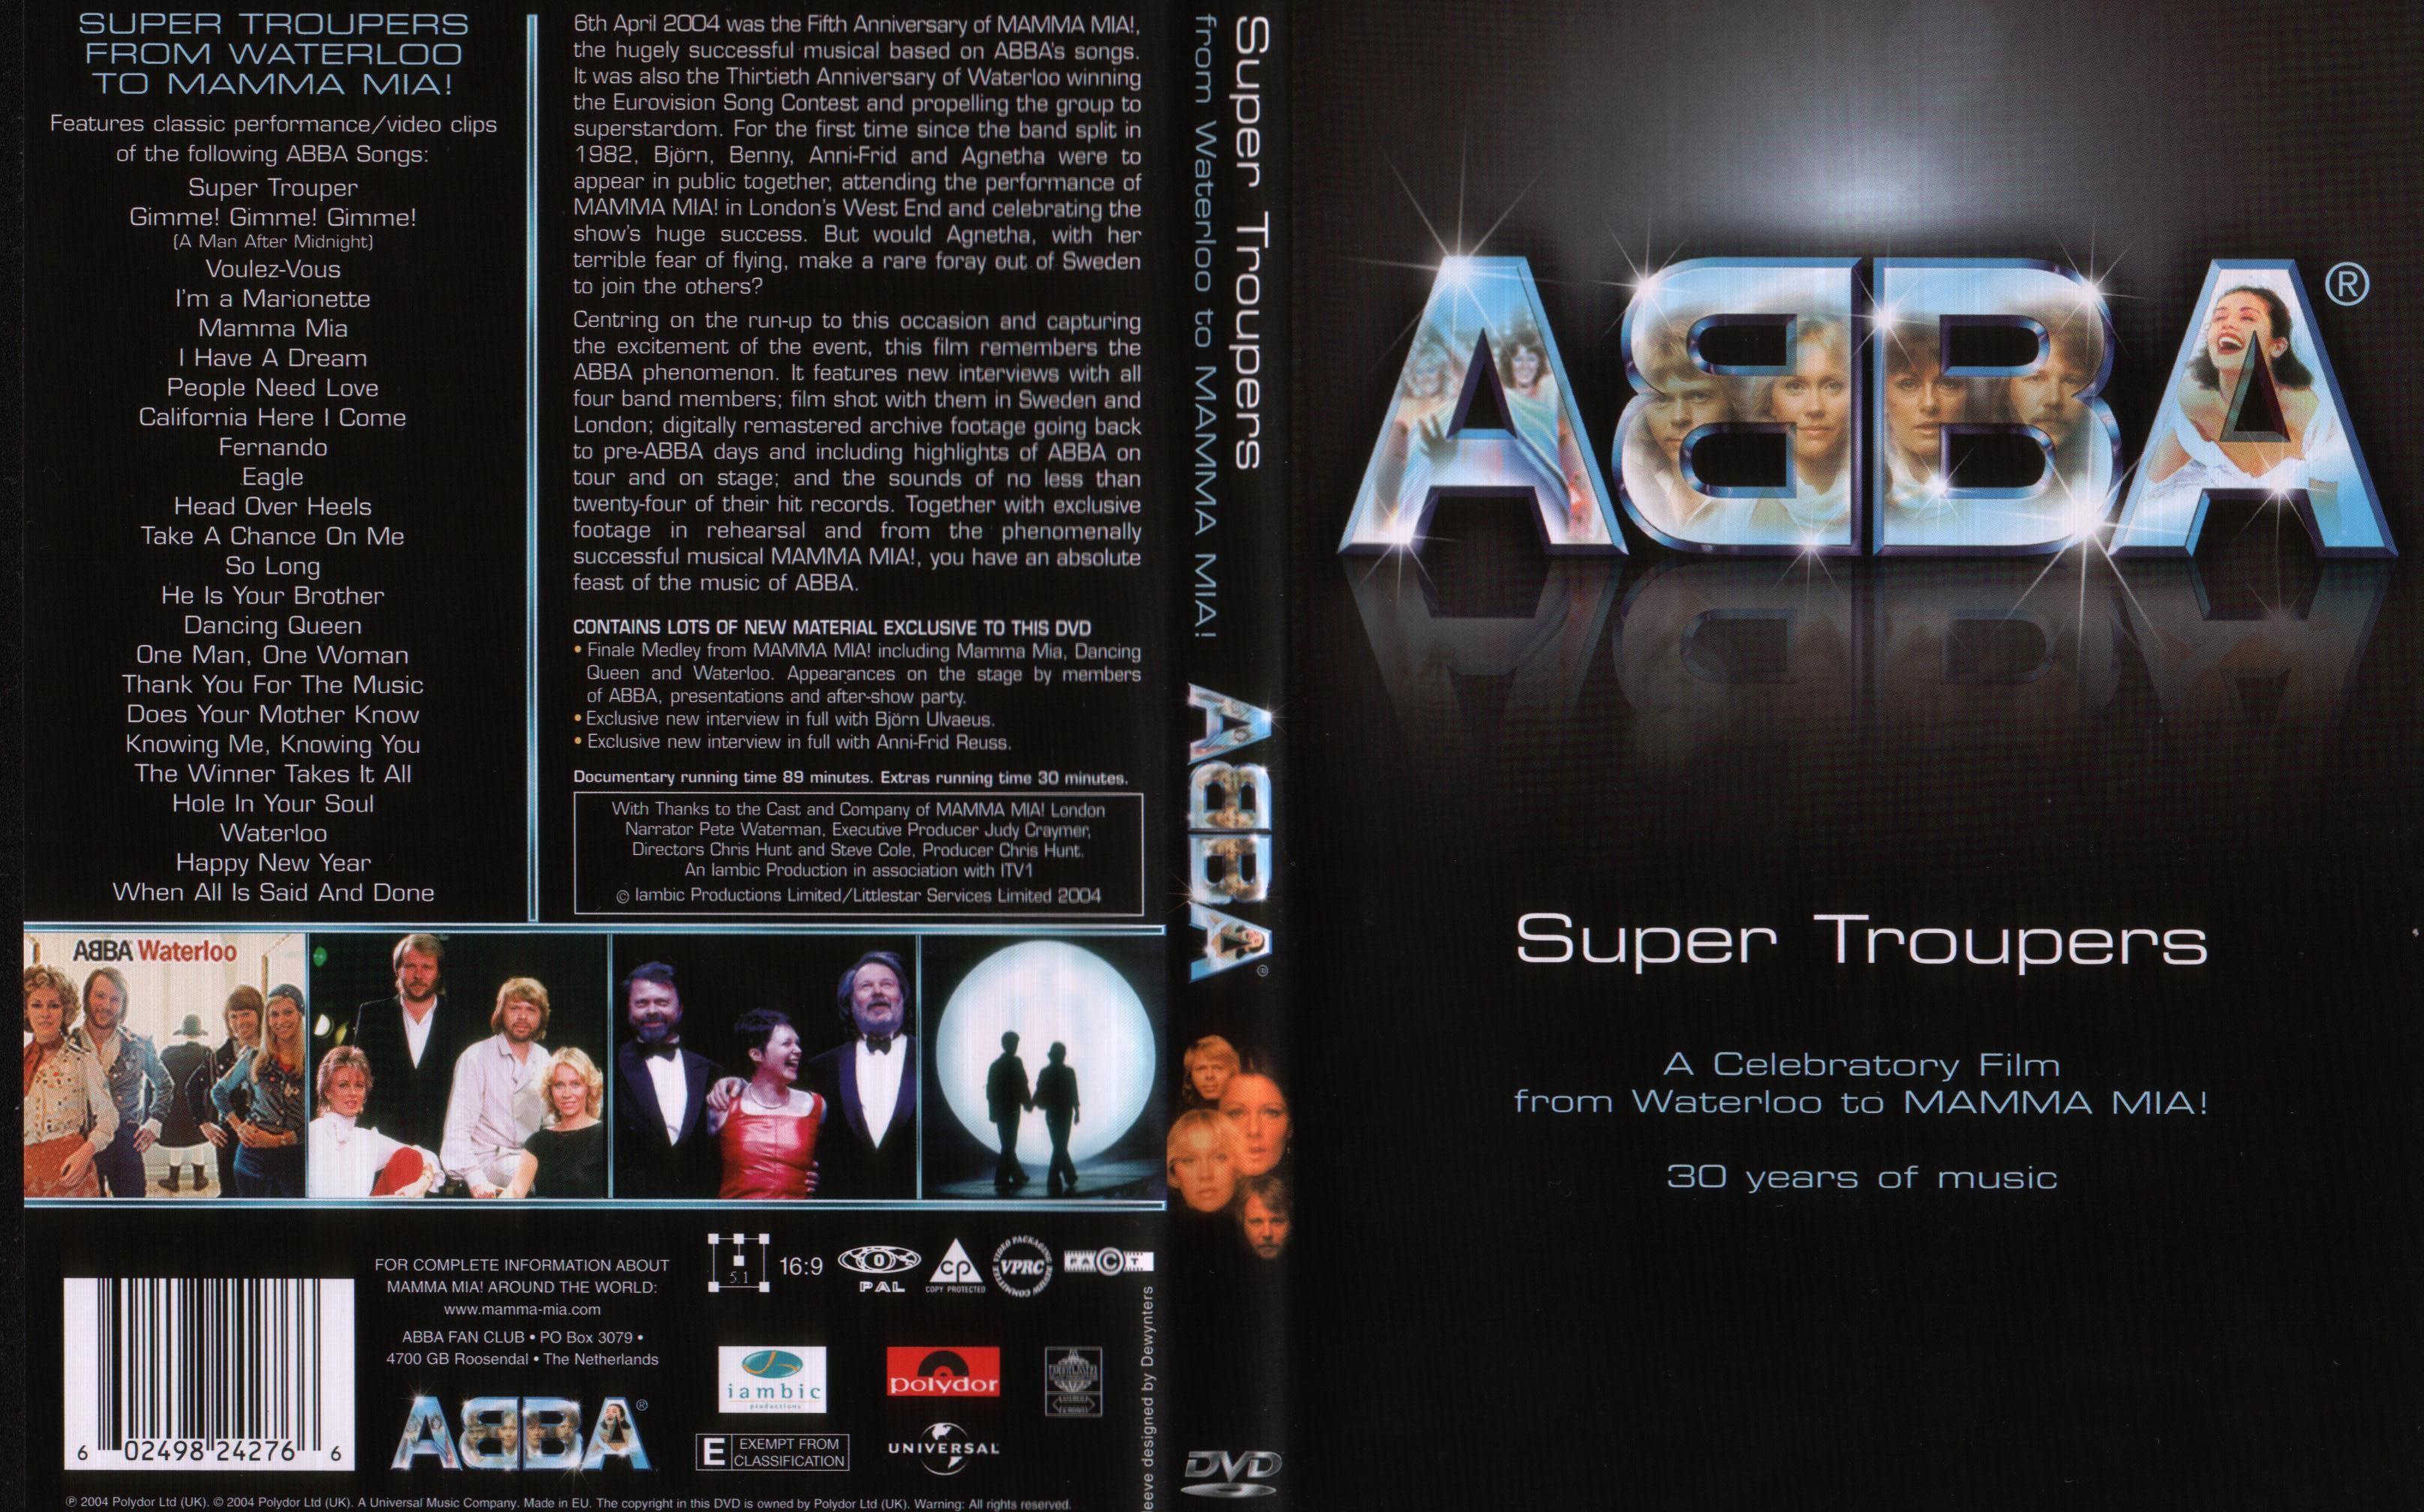 Jaquette DVD ABBA super troupers